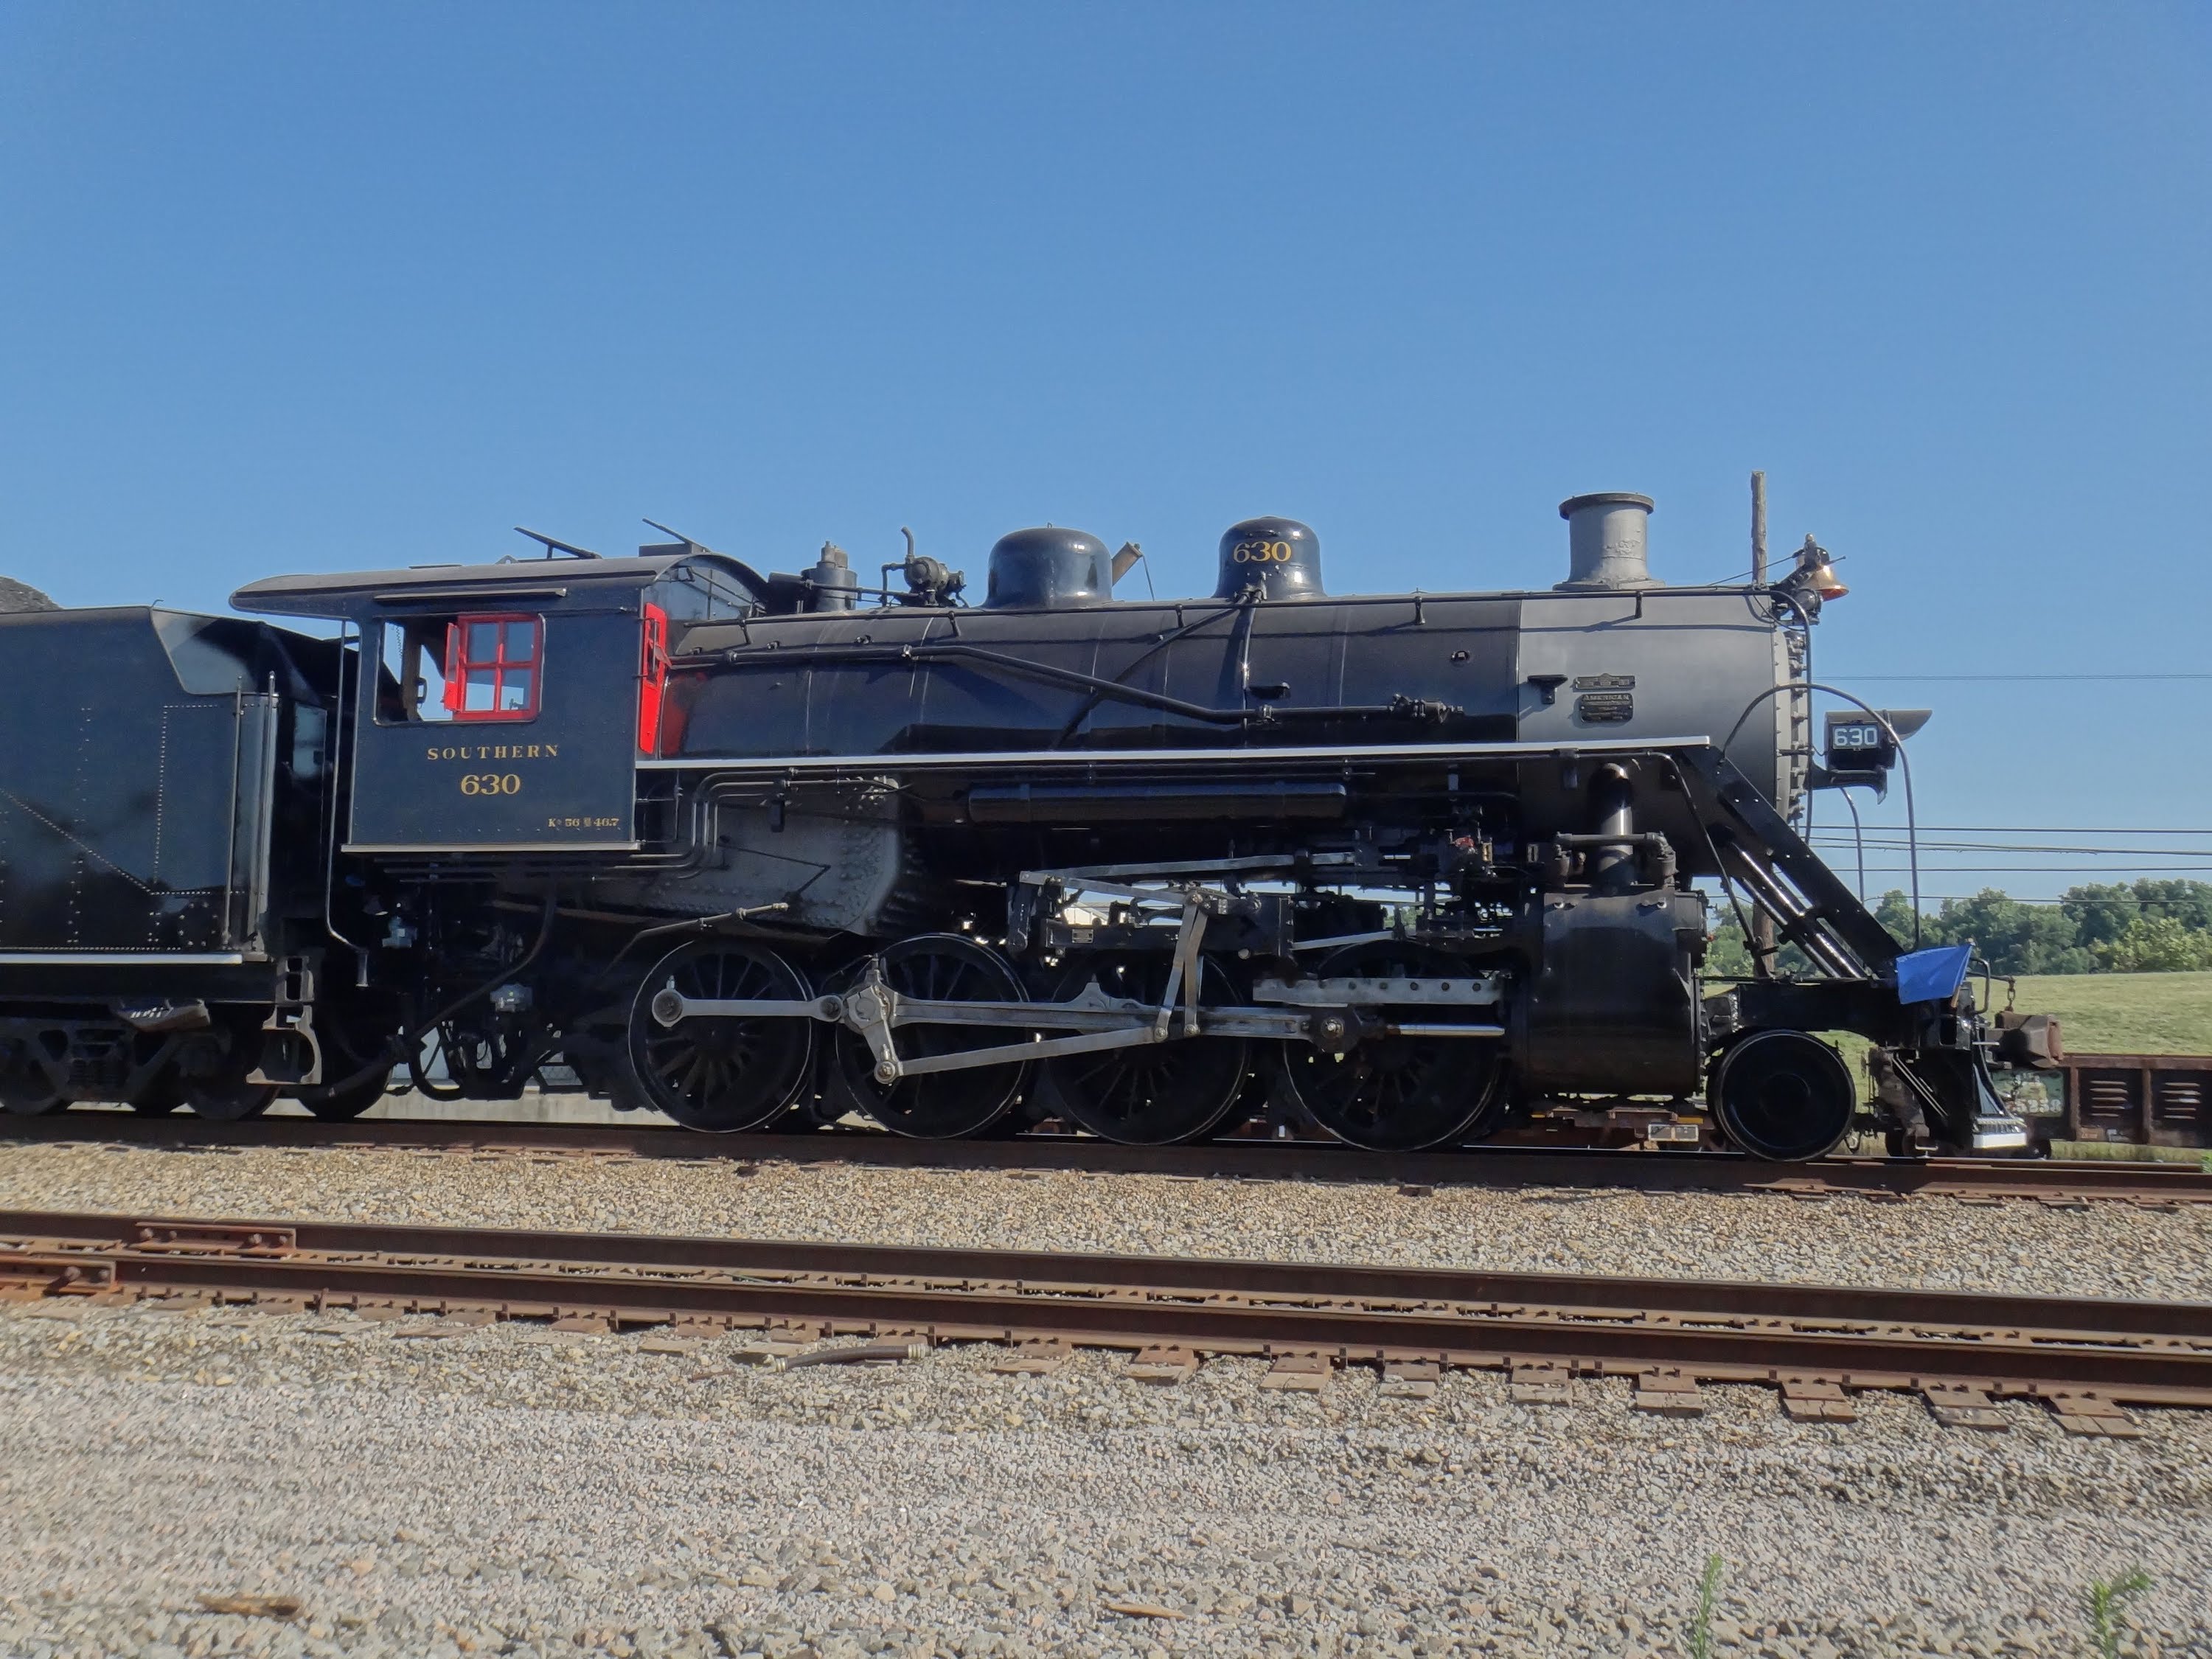 Steam locomotive photo